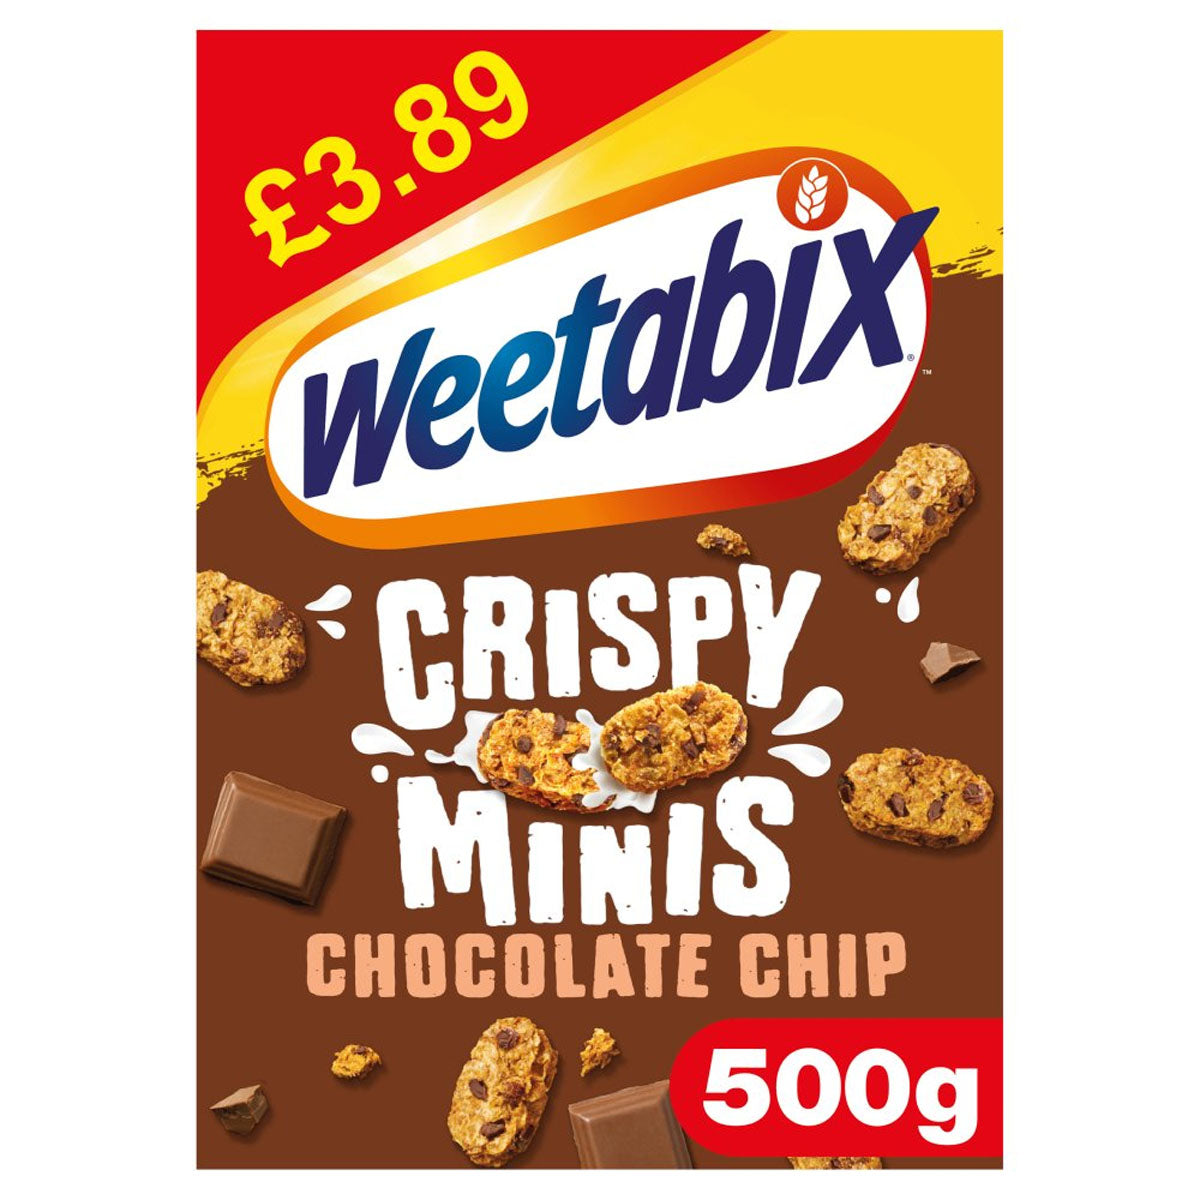 Weetabix - Crispy Minis Chocolate Chip - 500g.